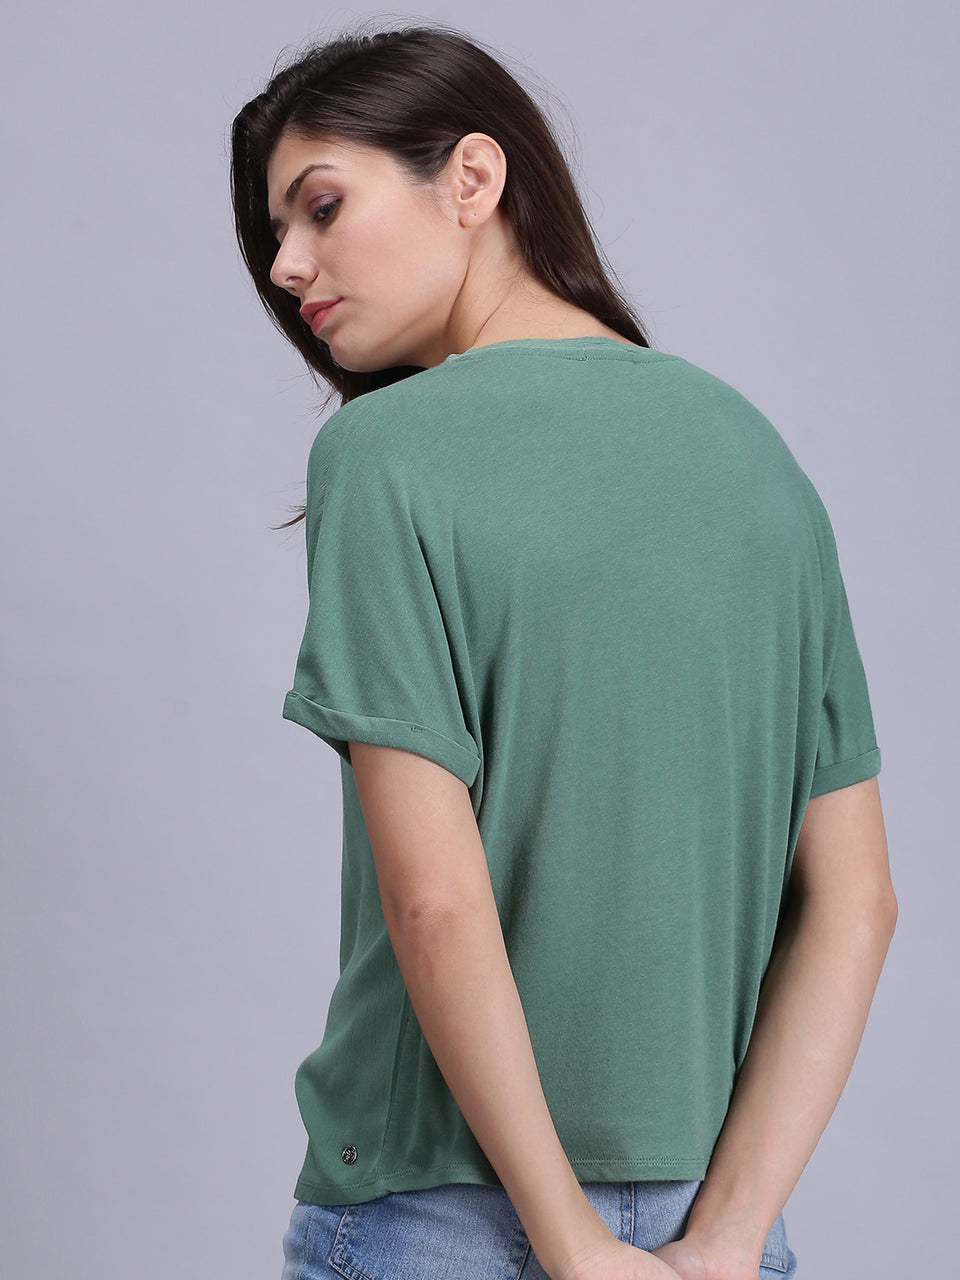 women solid green v neck tops